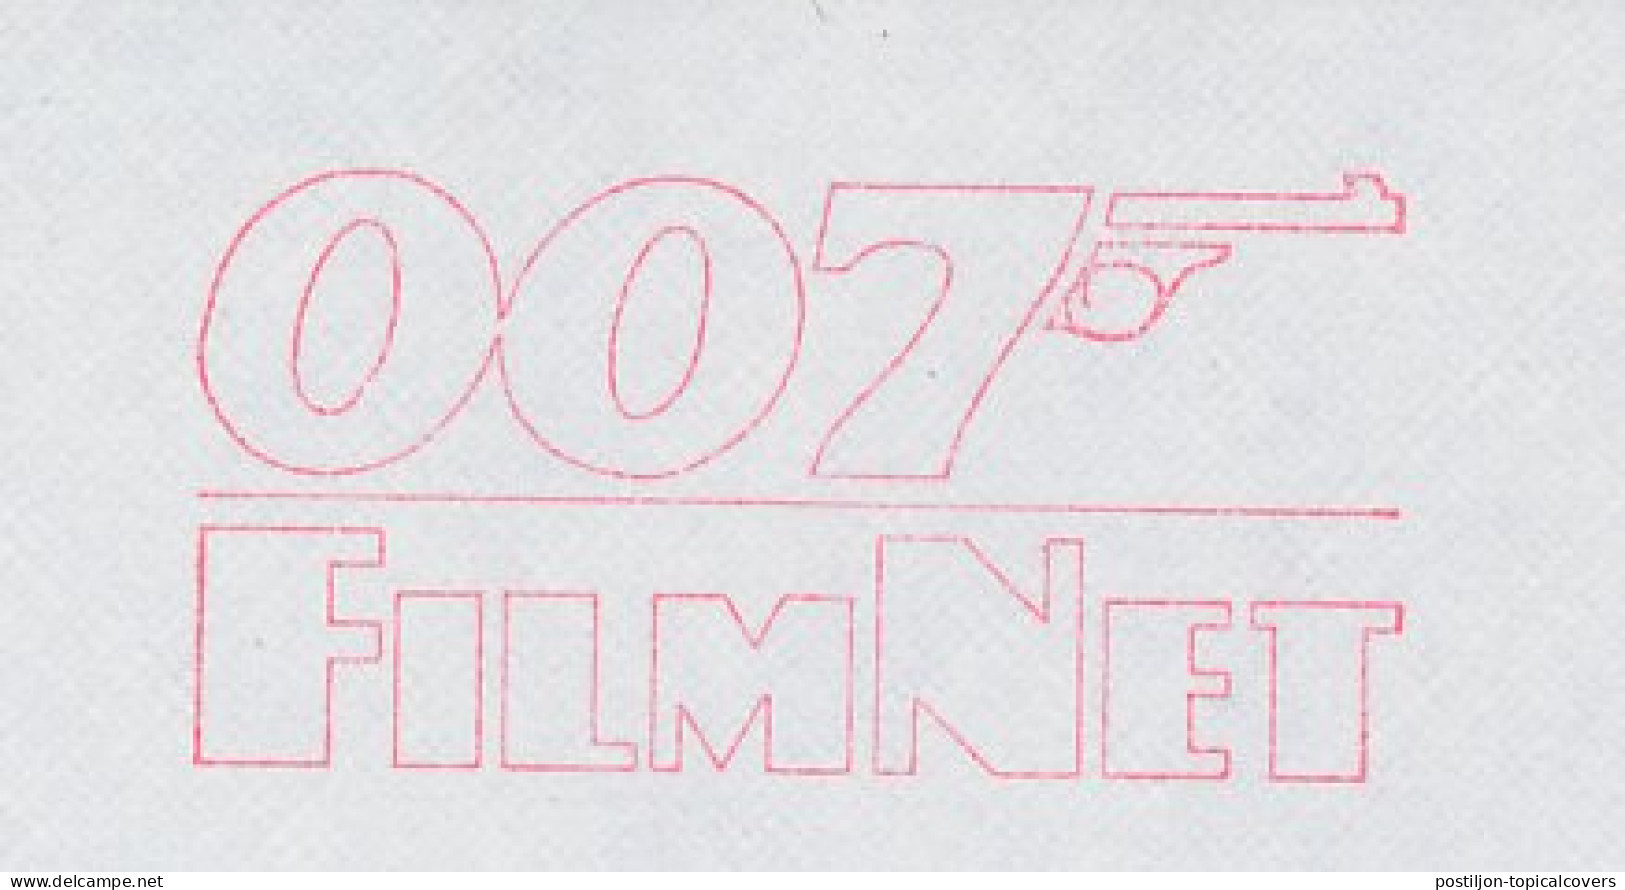 Meter Cut Netherlands 1988 007 - James Bond - Filmnet - Movie - Film